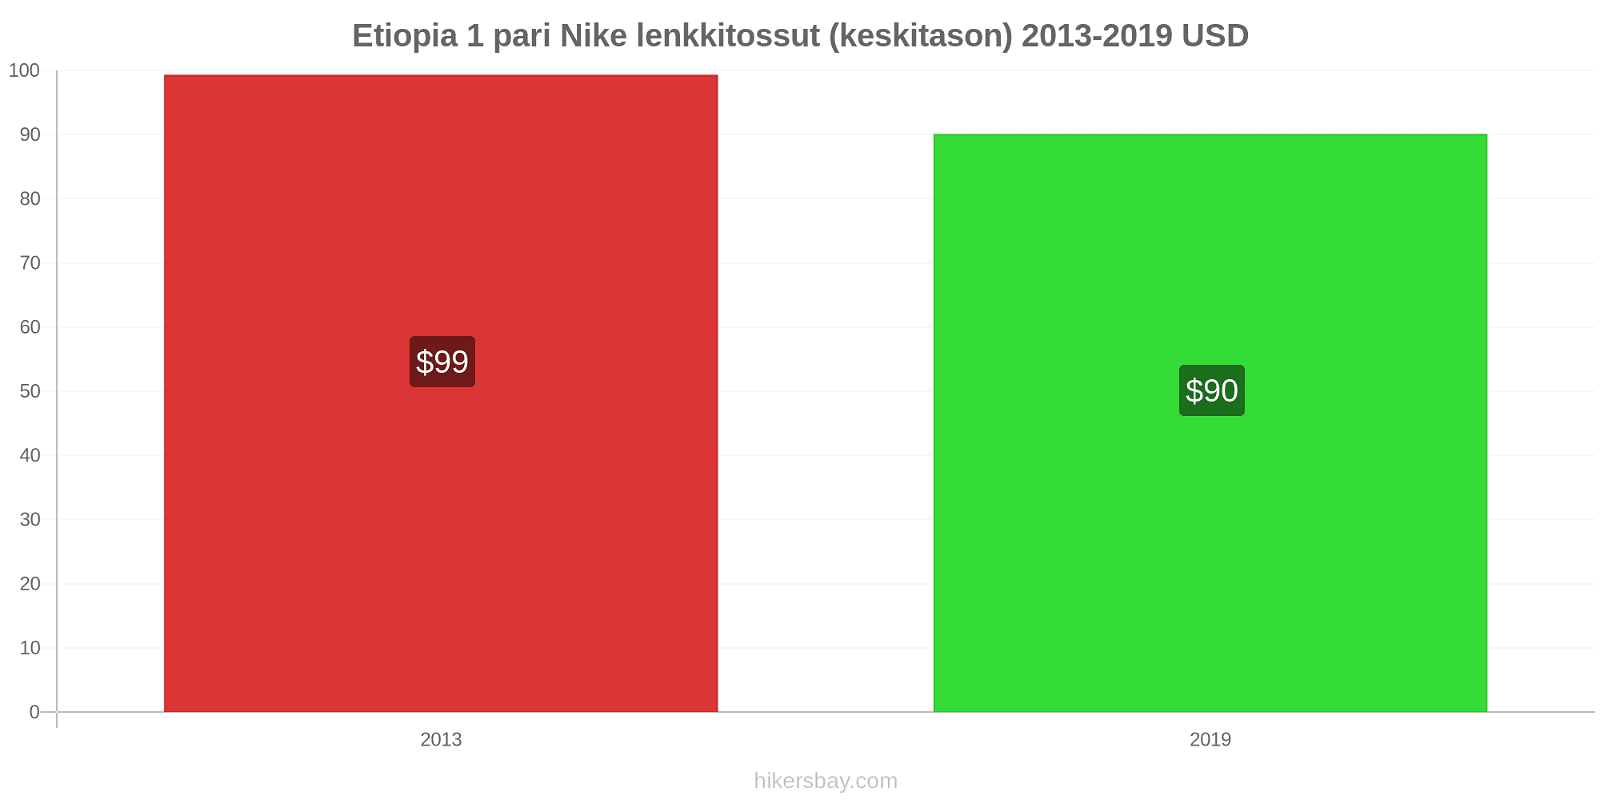 Etiopia hintojen muutokset 1 pari Nike lenkkitossut (keskitason) hikersbay.com